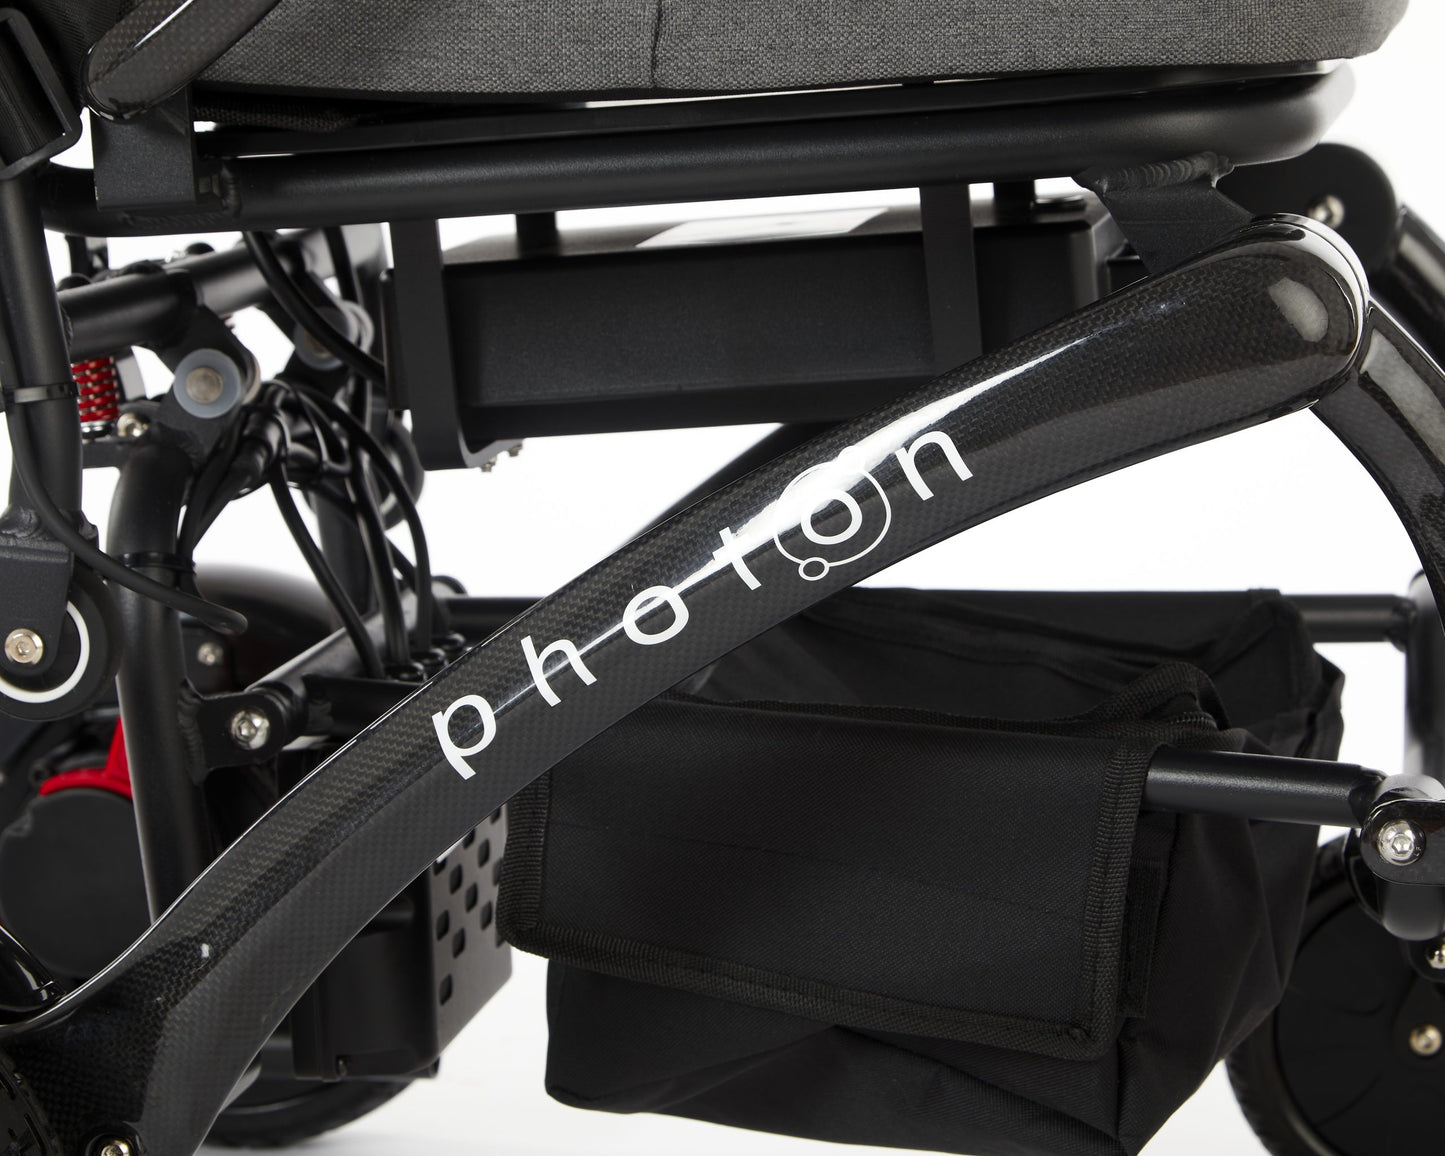 Photon Folding Electric Wheelchair